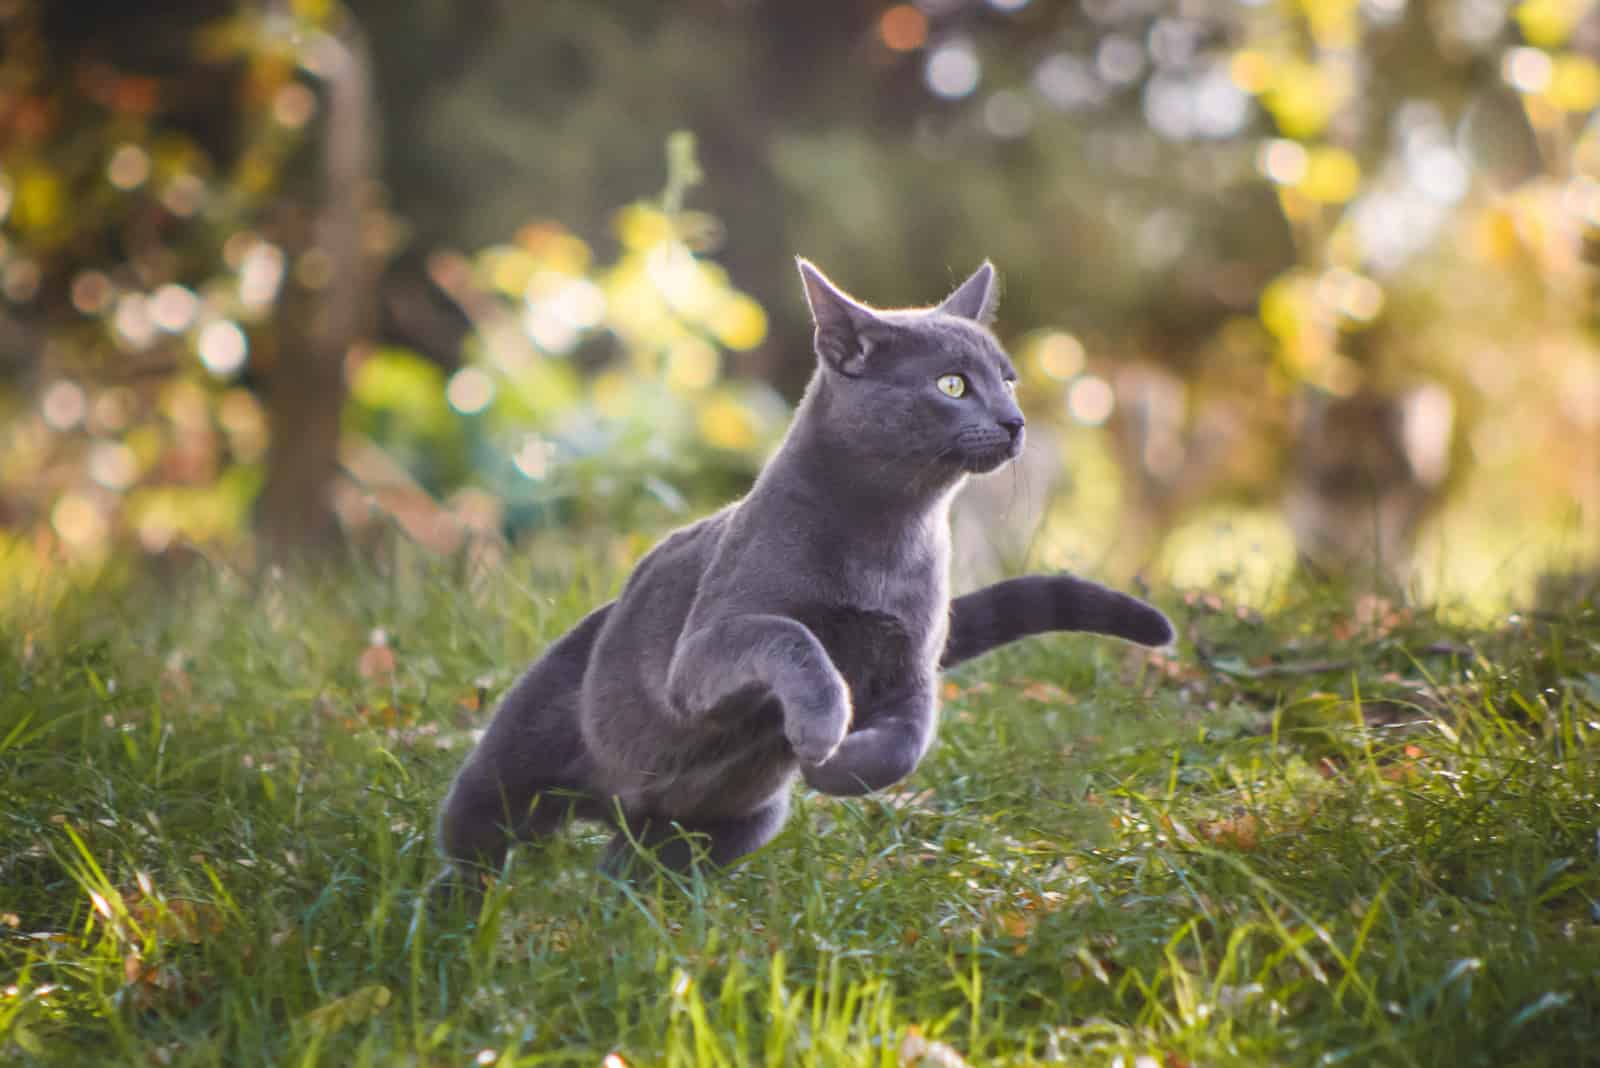 Russian Blue Cat running on grass outside